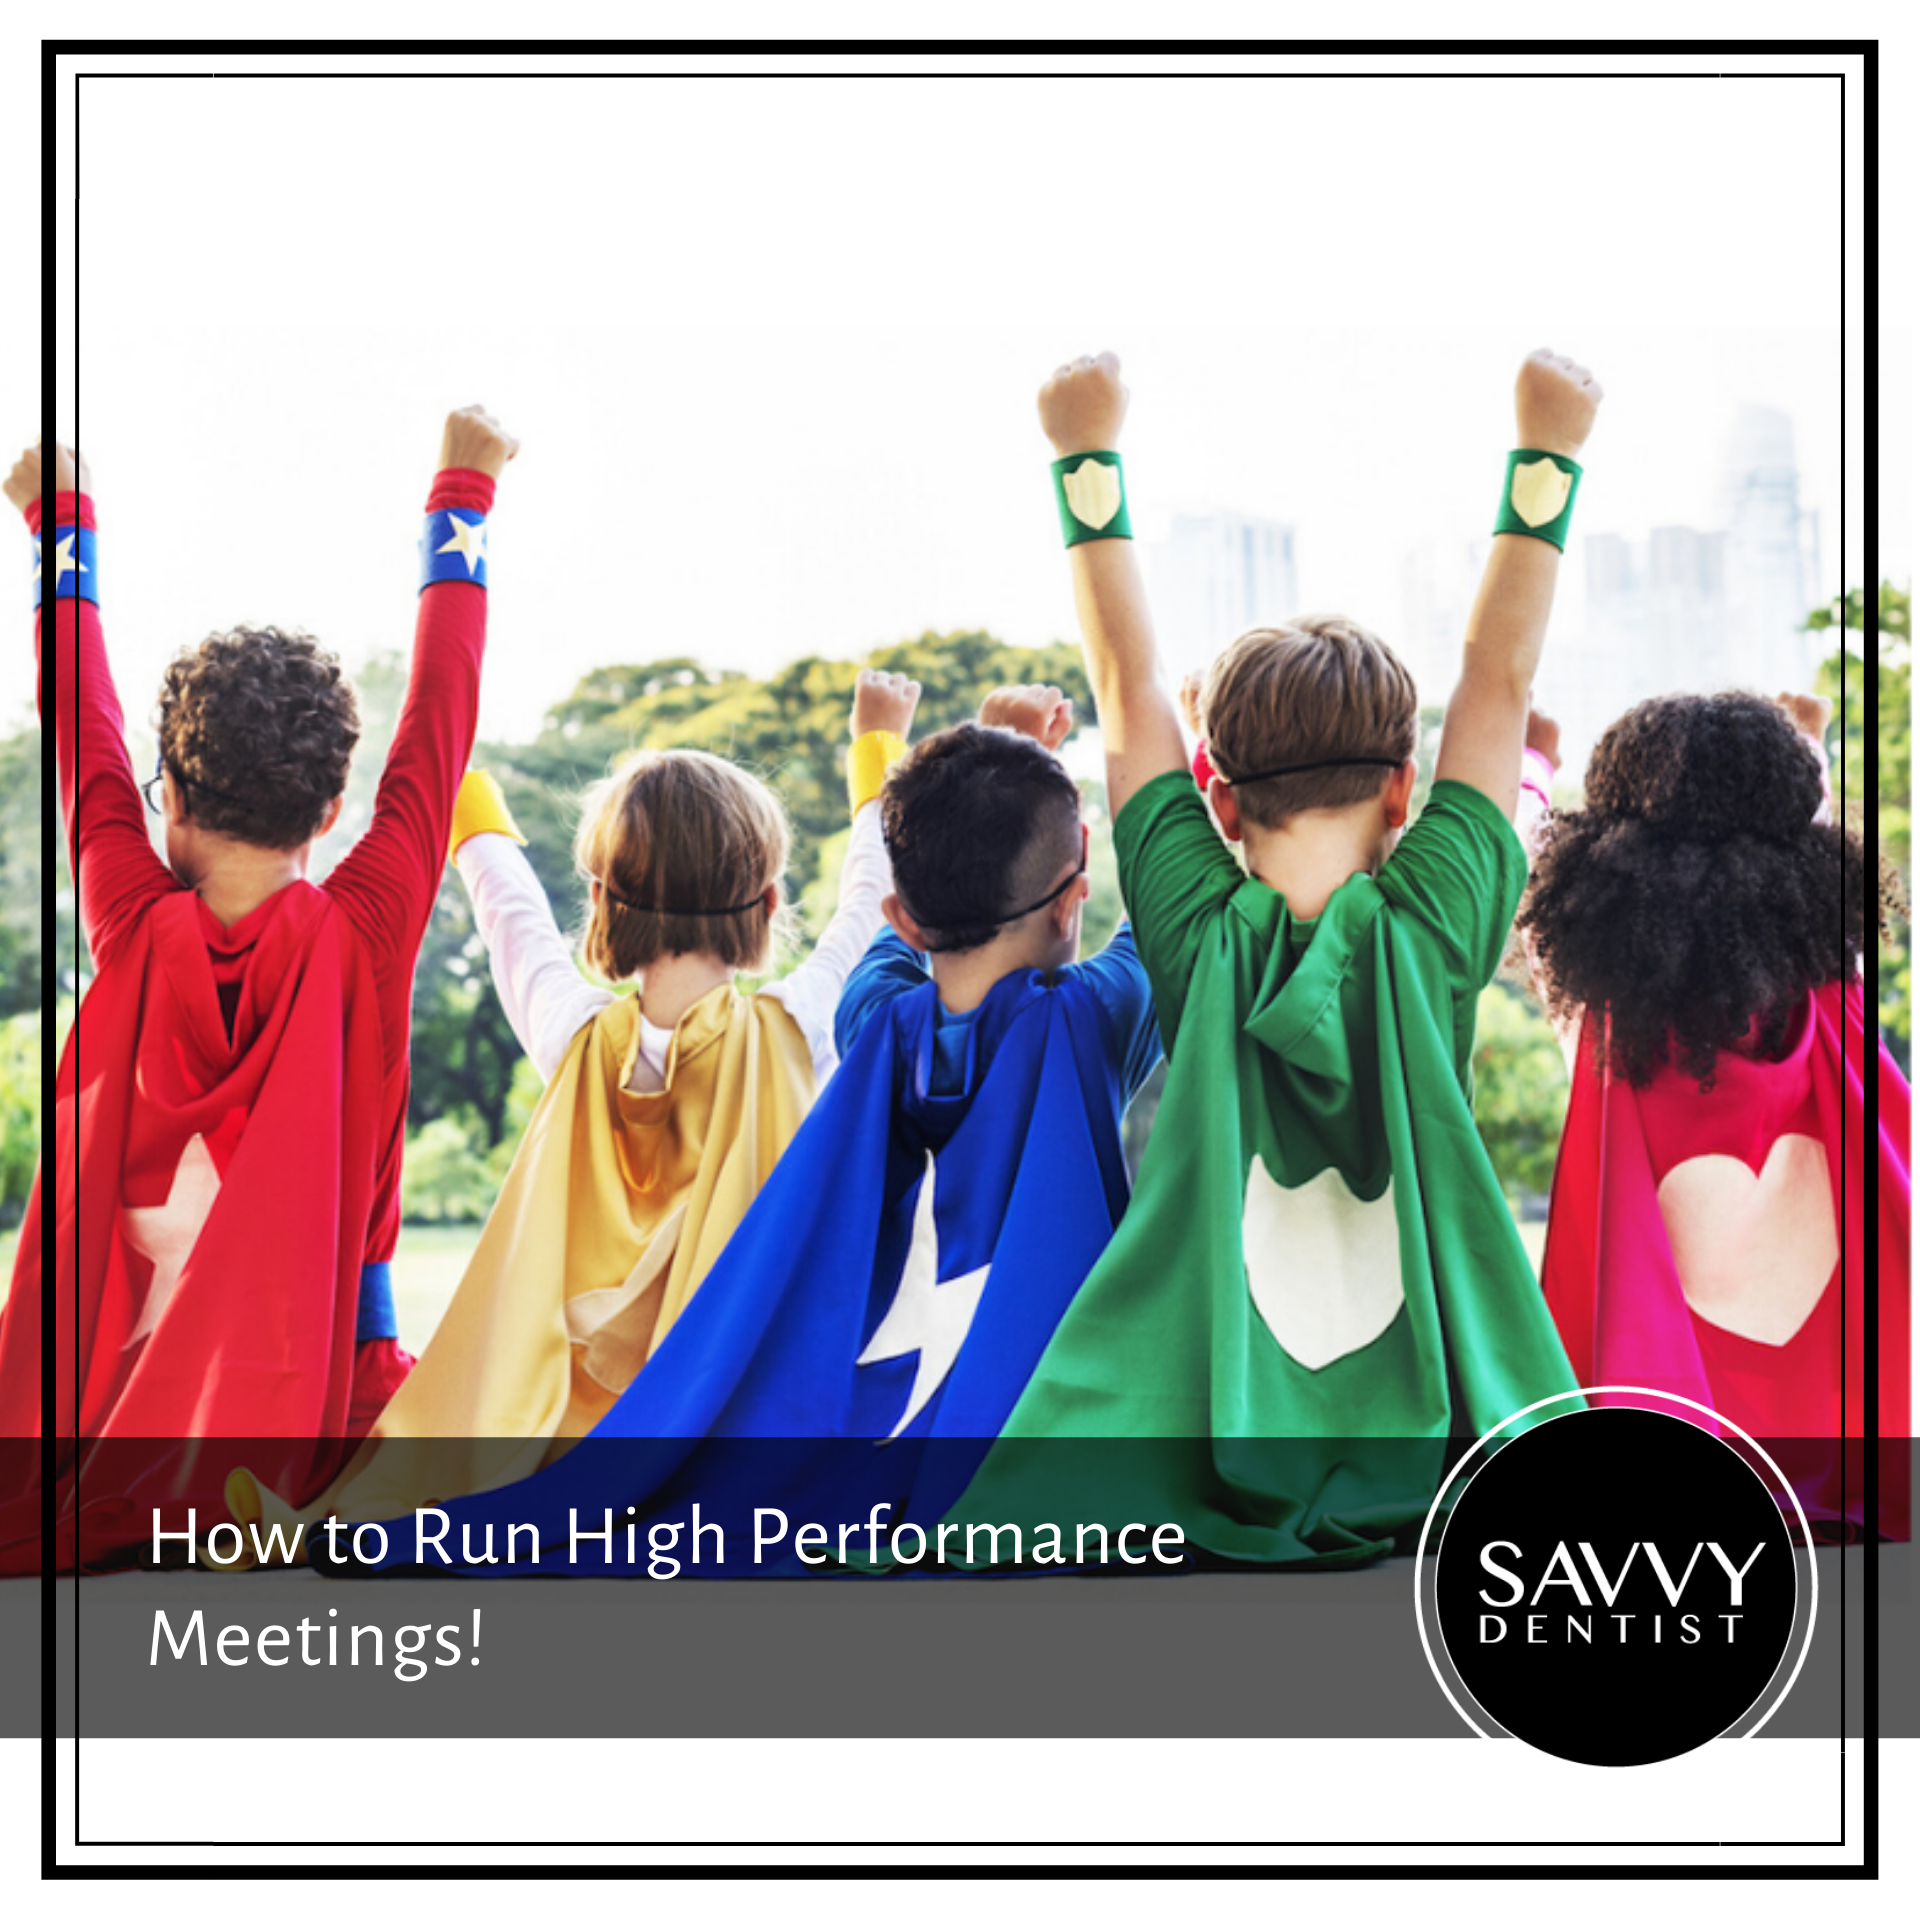 How to run high performance meetings!